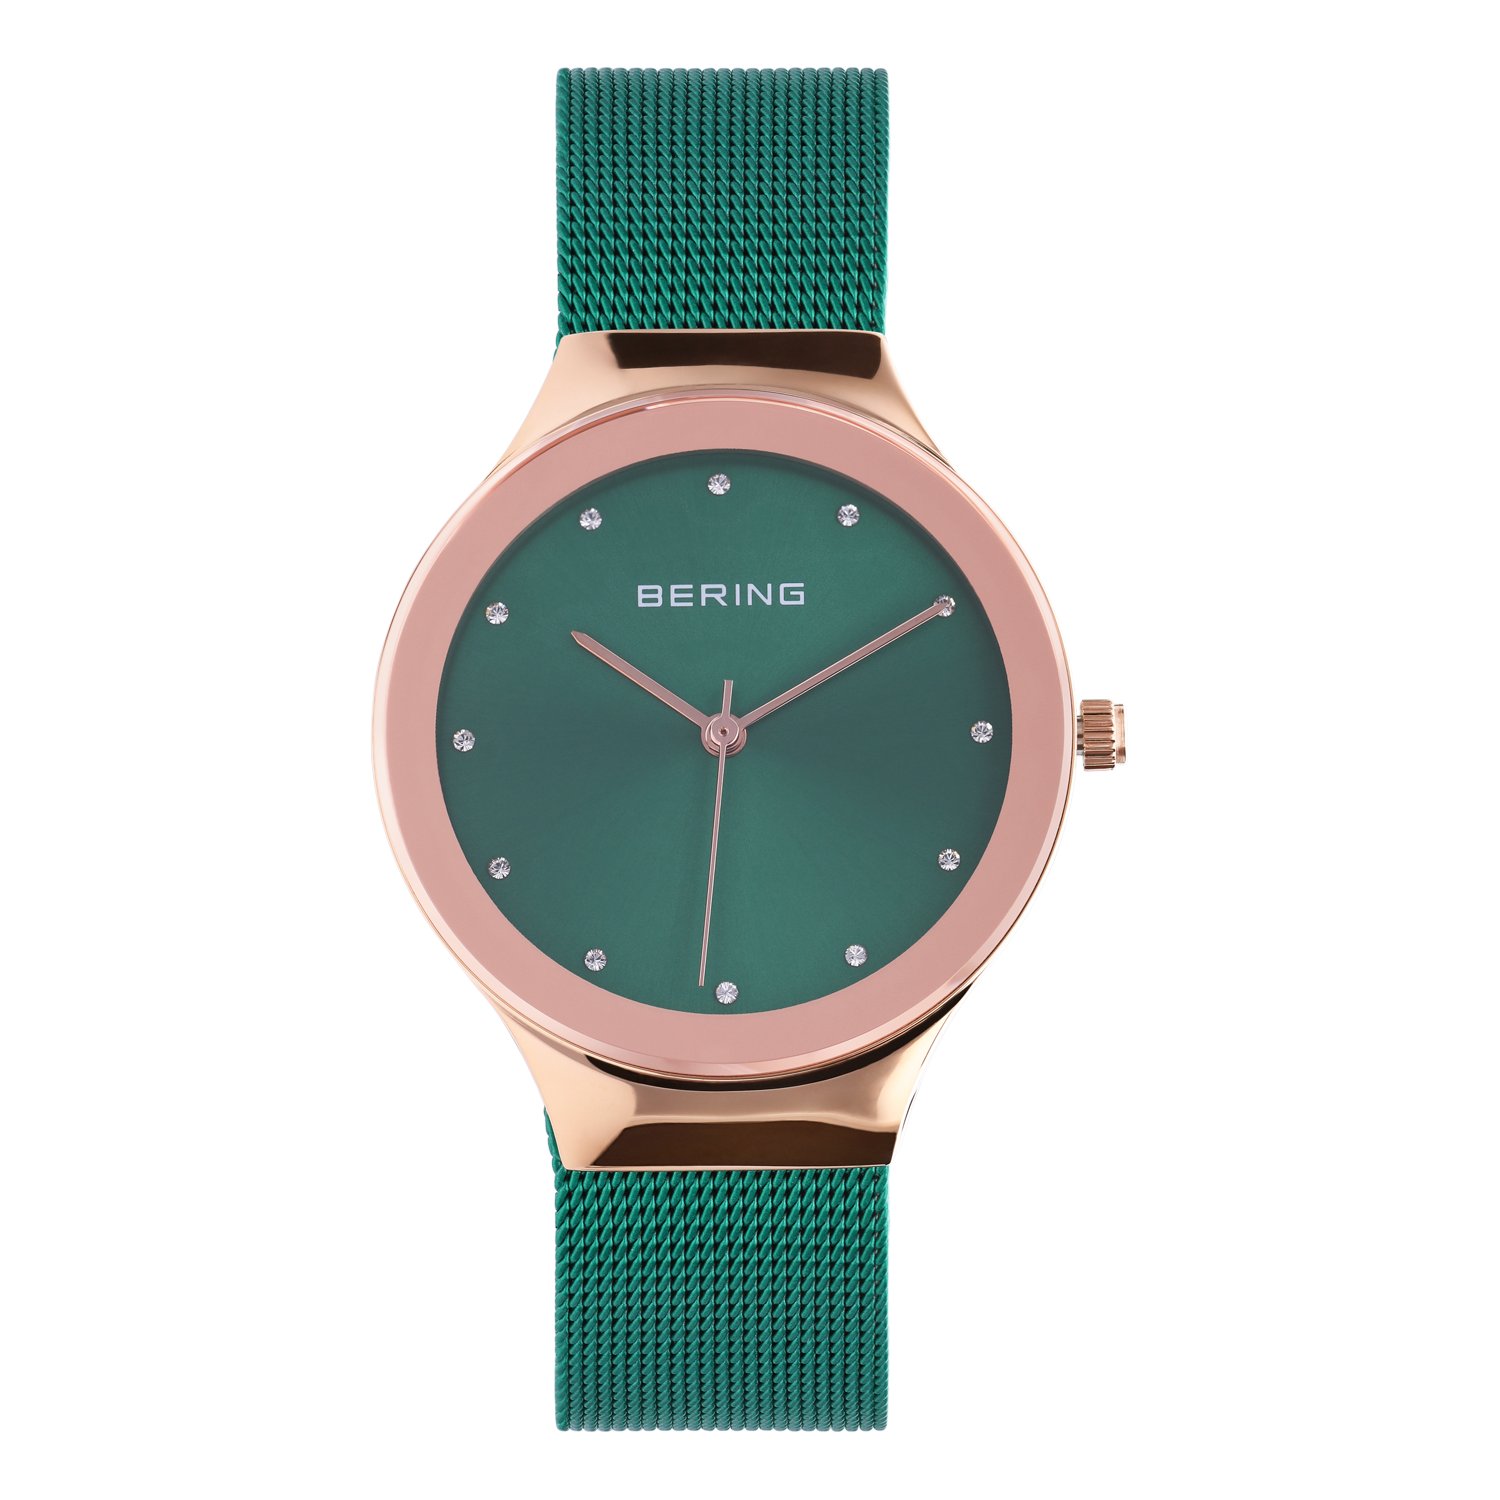 Bering horloge met mesh band groen 12934-868